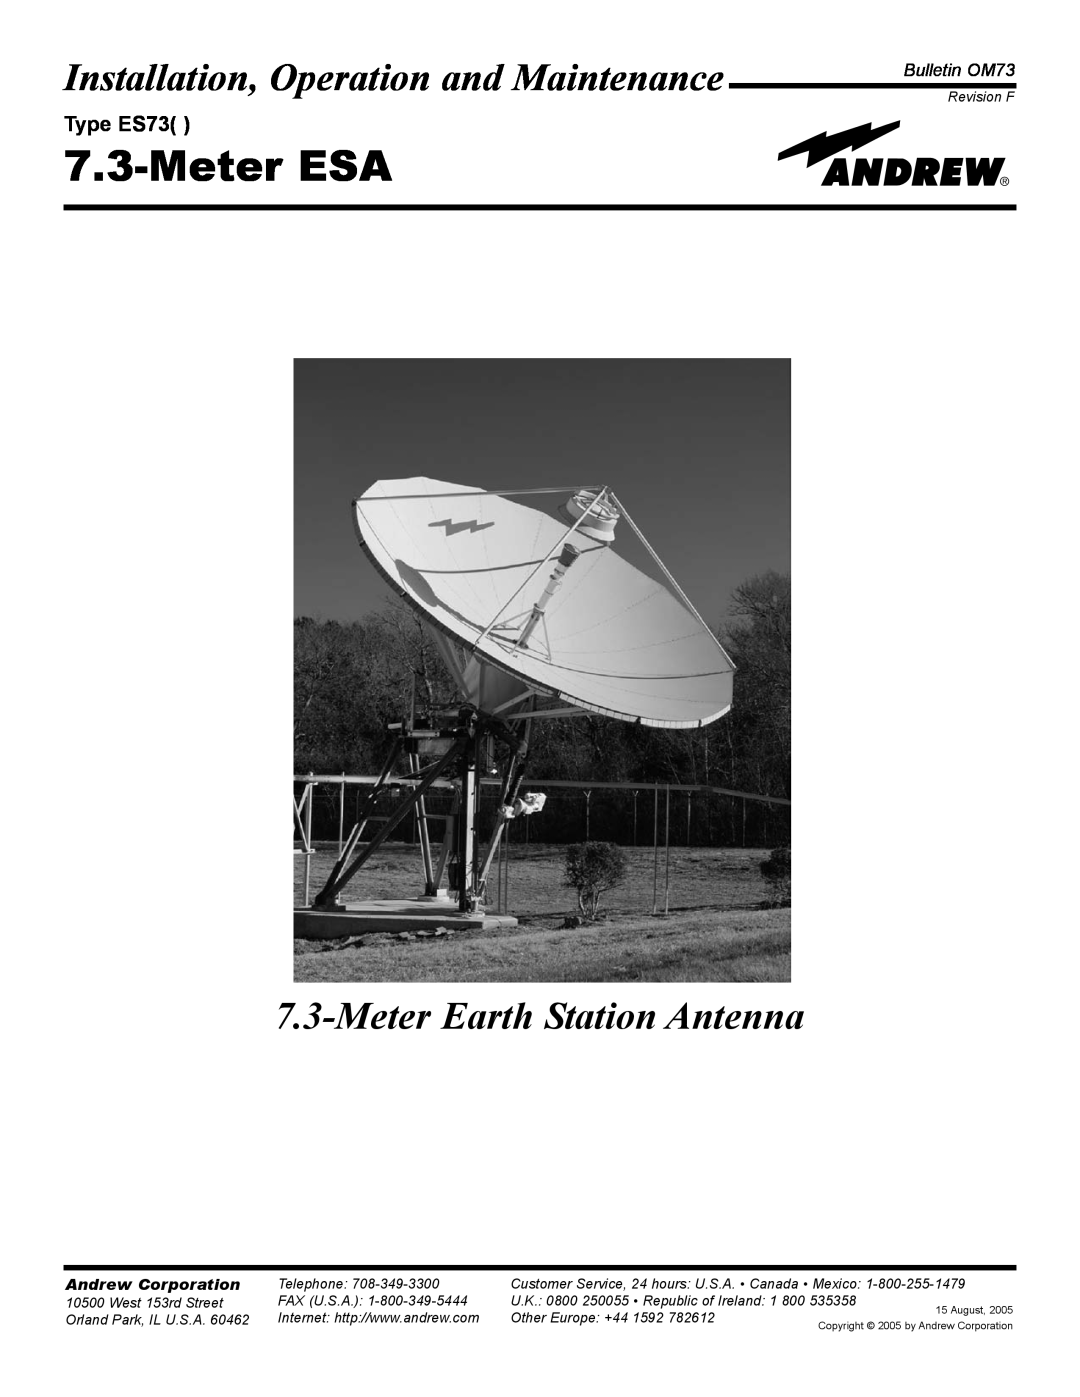 Andrew manual Type ES73, MeterESA, Installation, Operation and Maintenance, MeterEarth Station Antenna, Bulletin OM73 